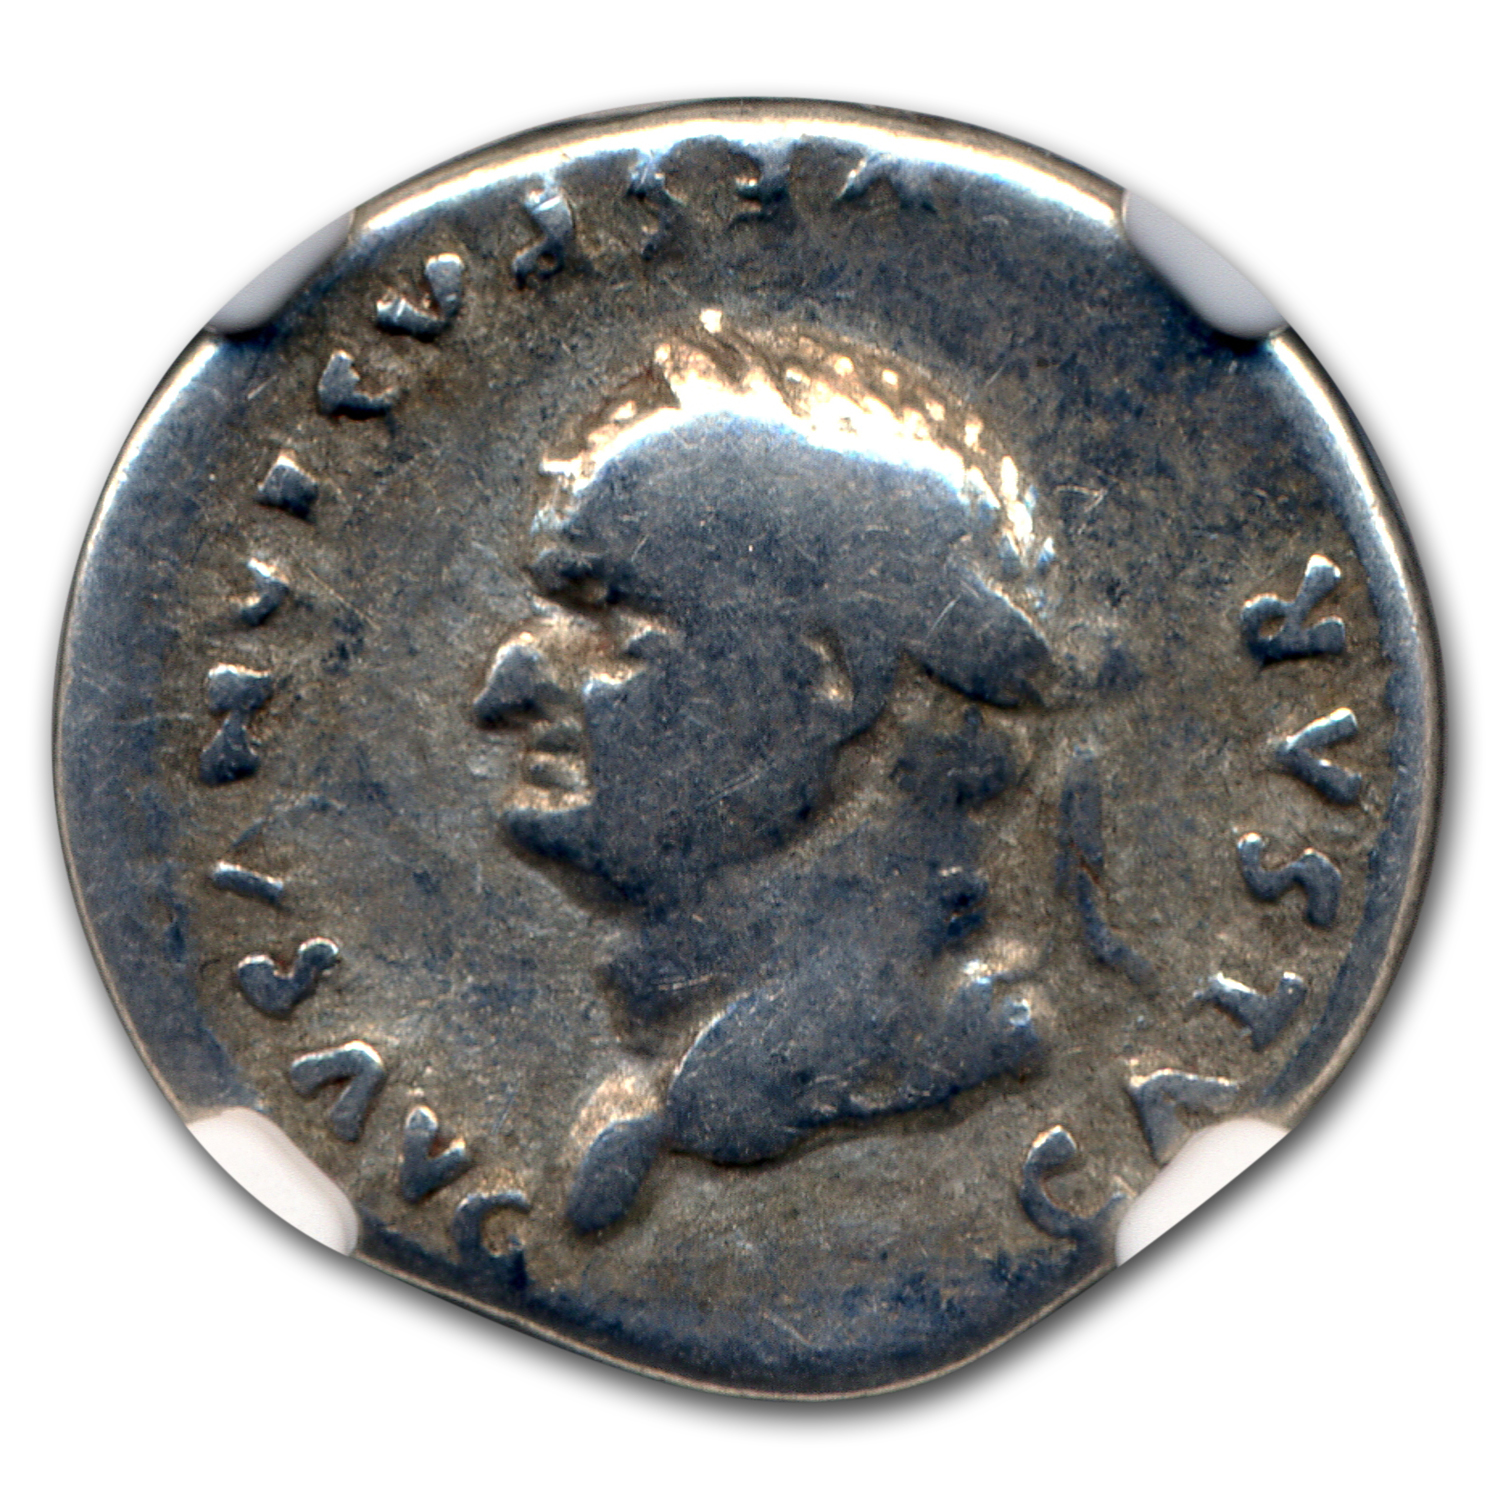 vespasian denarius with bull